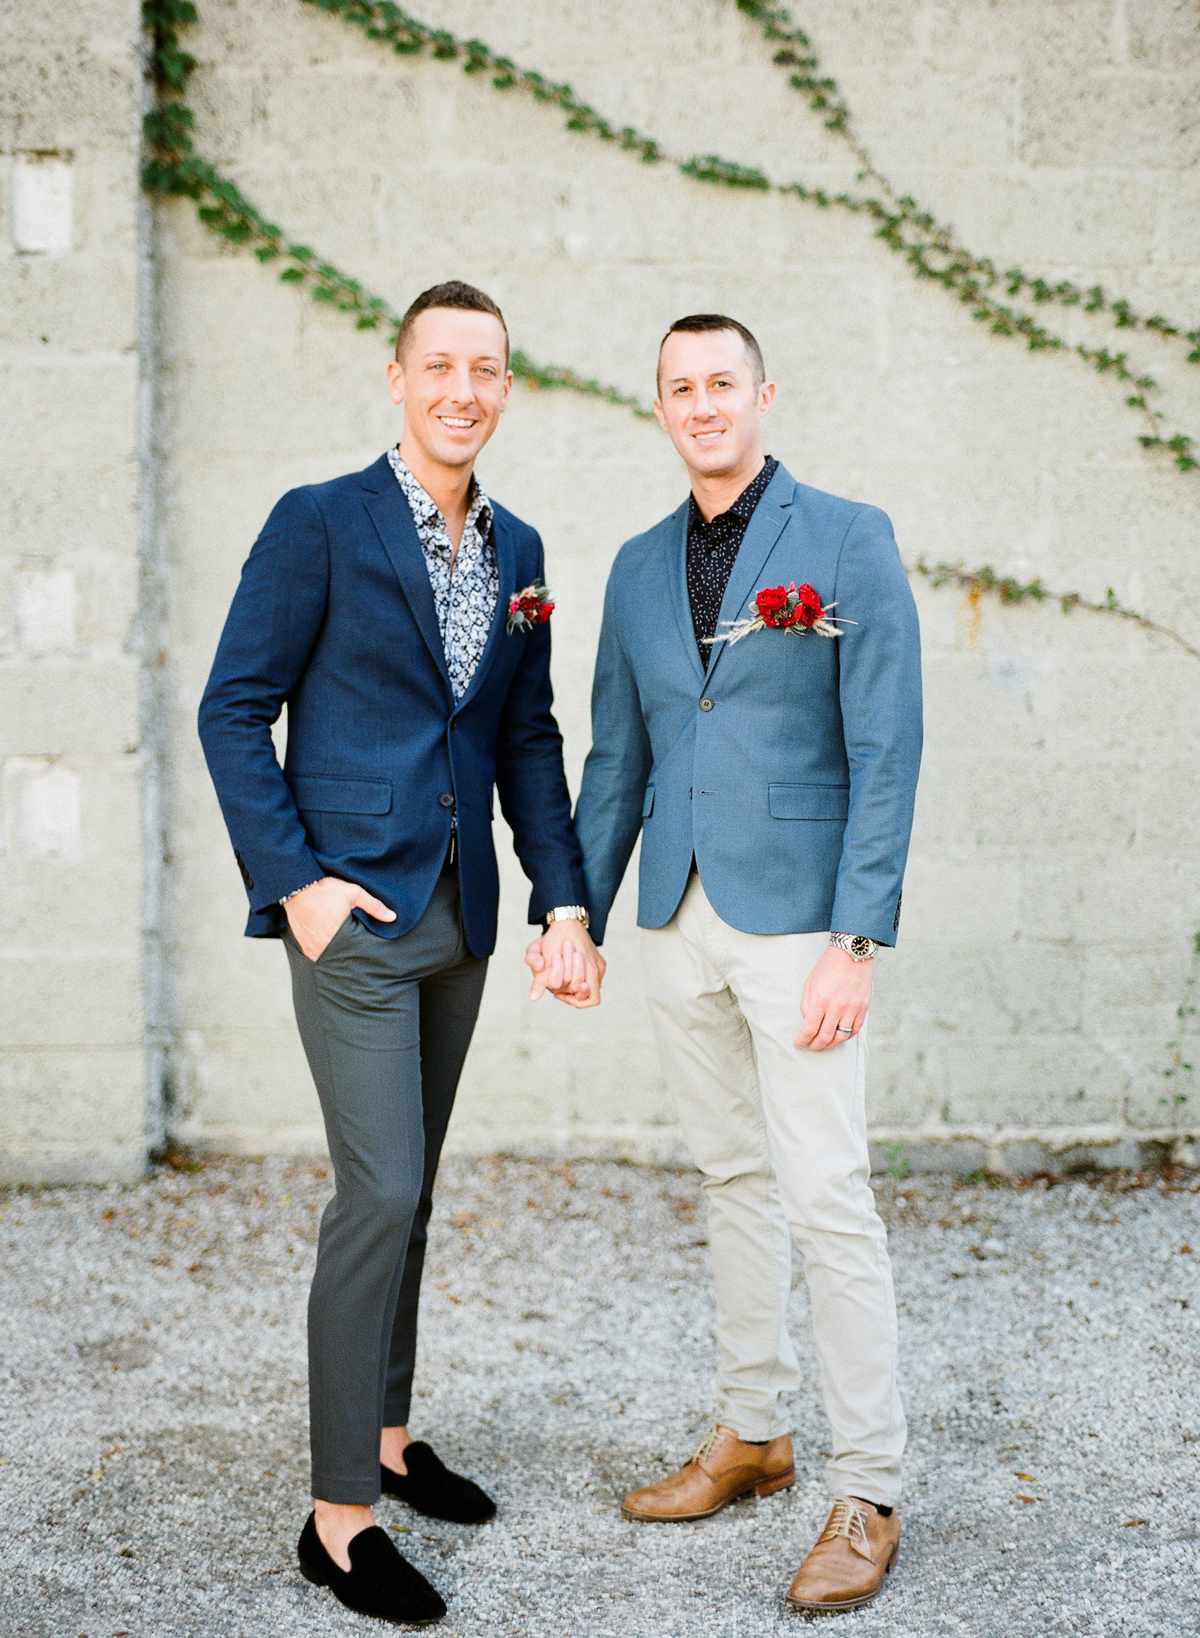 cute gay men wedding outfits